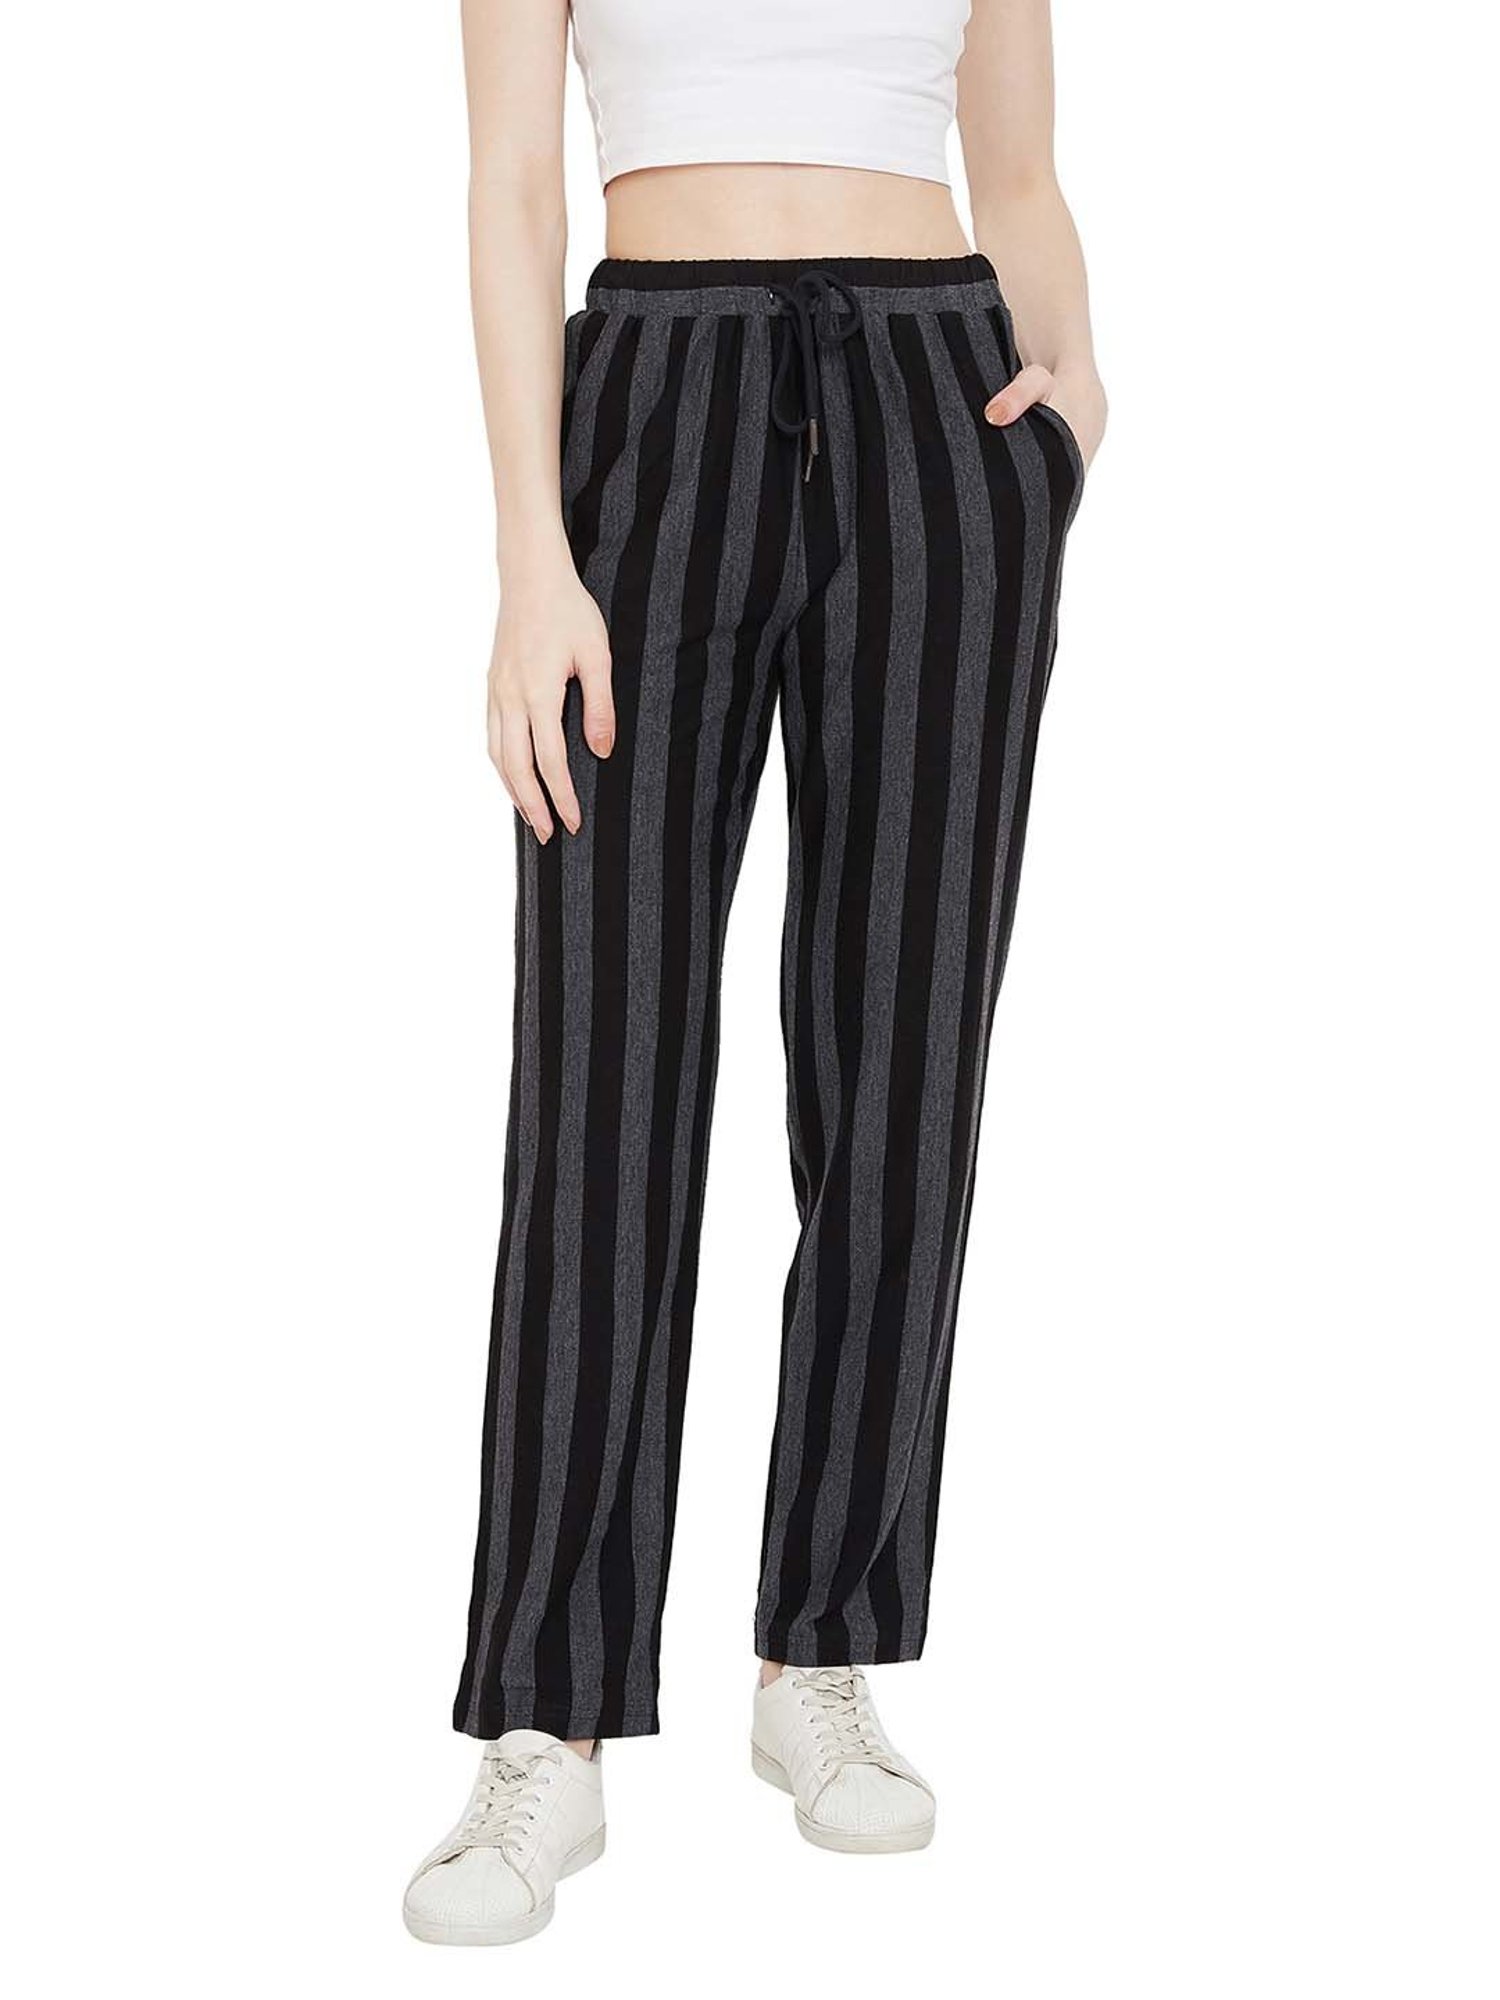 Buy Hypernation Black  Grey Striped Pants for Women Online  Tata CLiQ